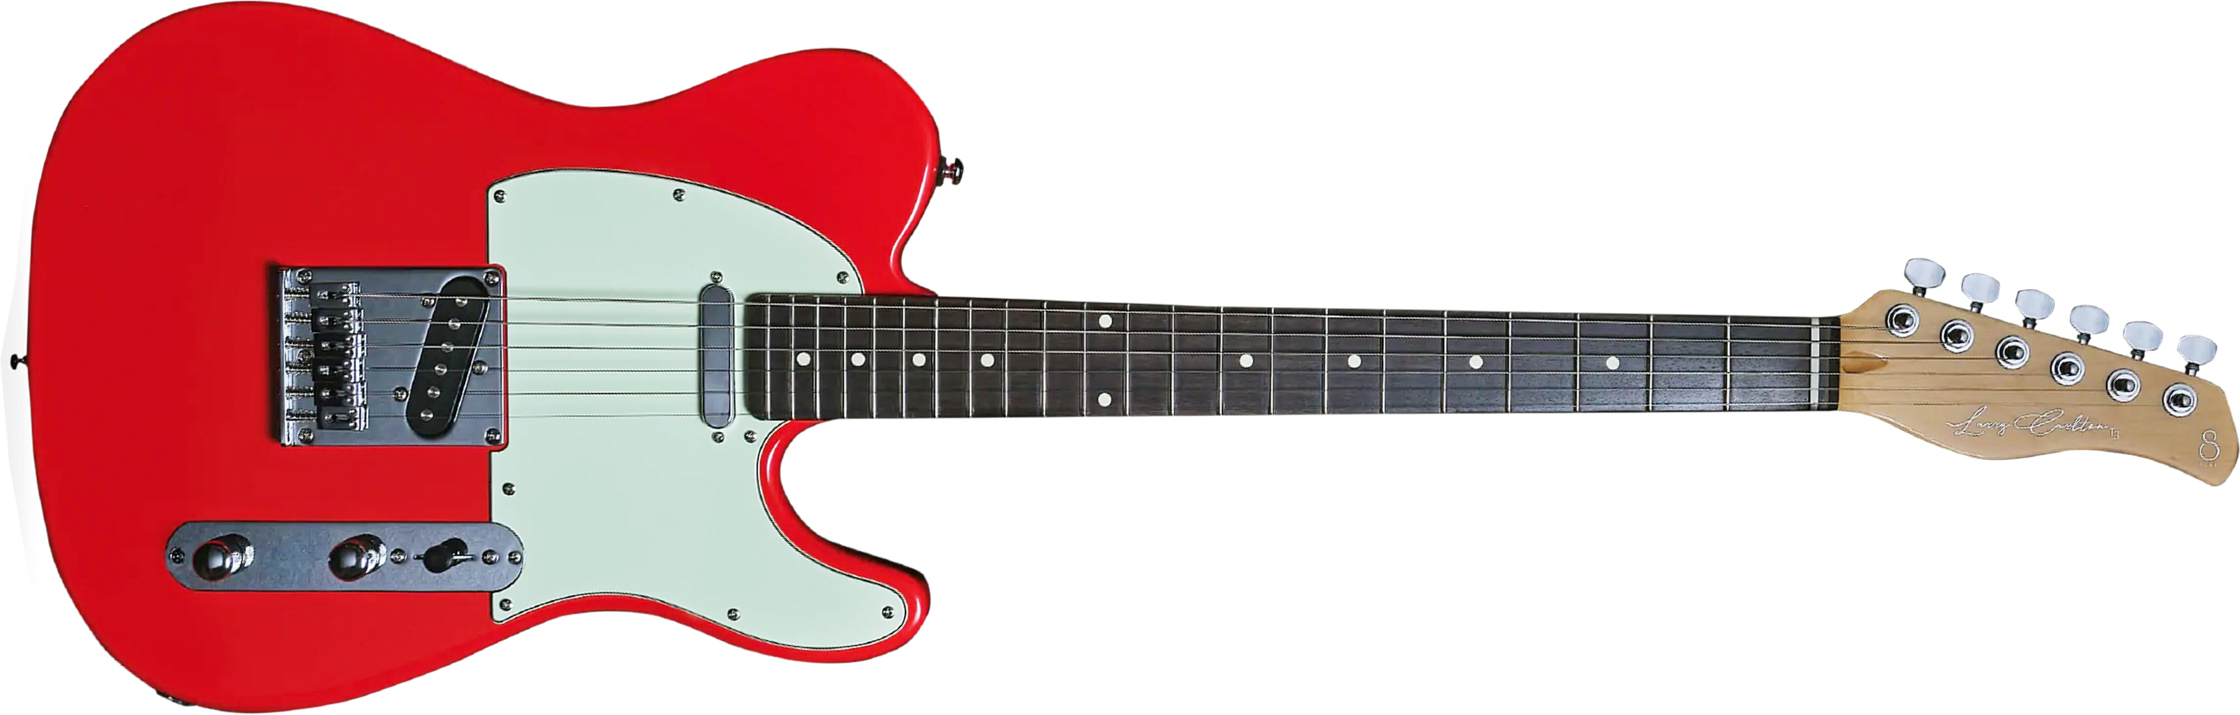 Sire Larry Carlton T3 Signature 2s Ht Rw - Dakota Red - Televorm elektrische gitaar - Main picture